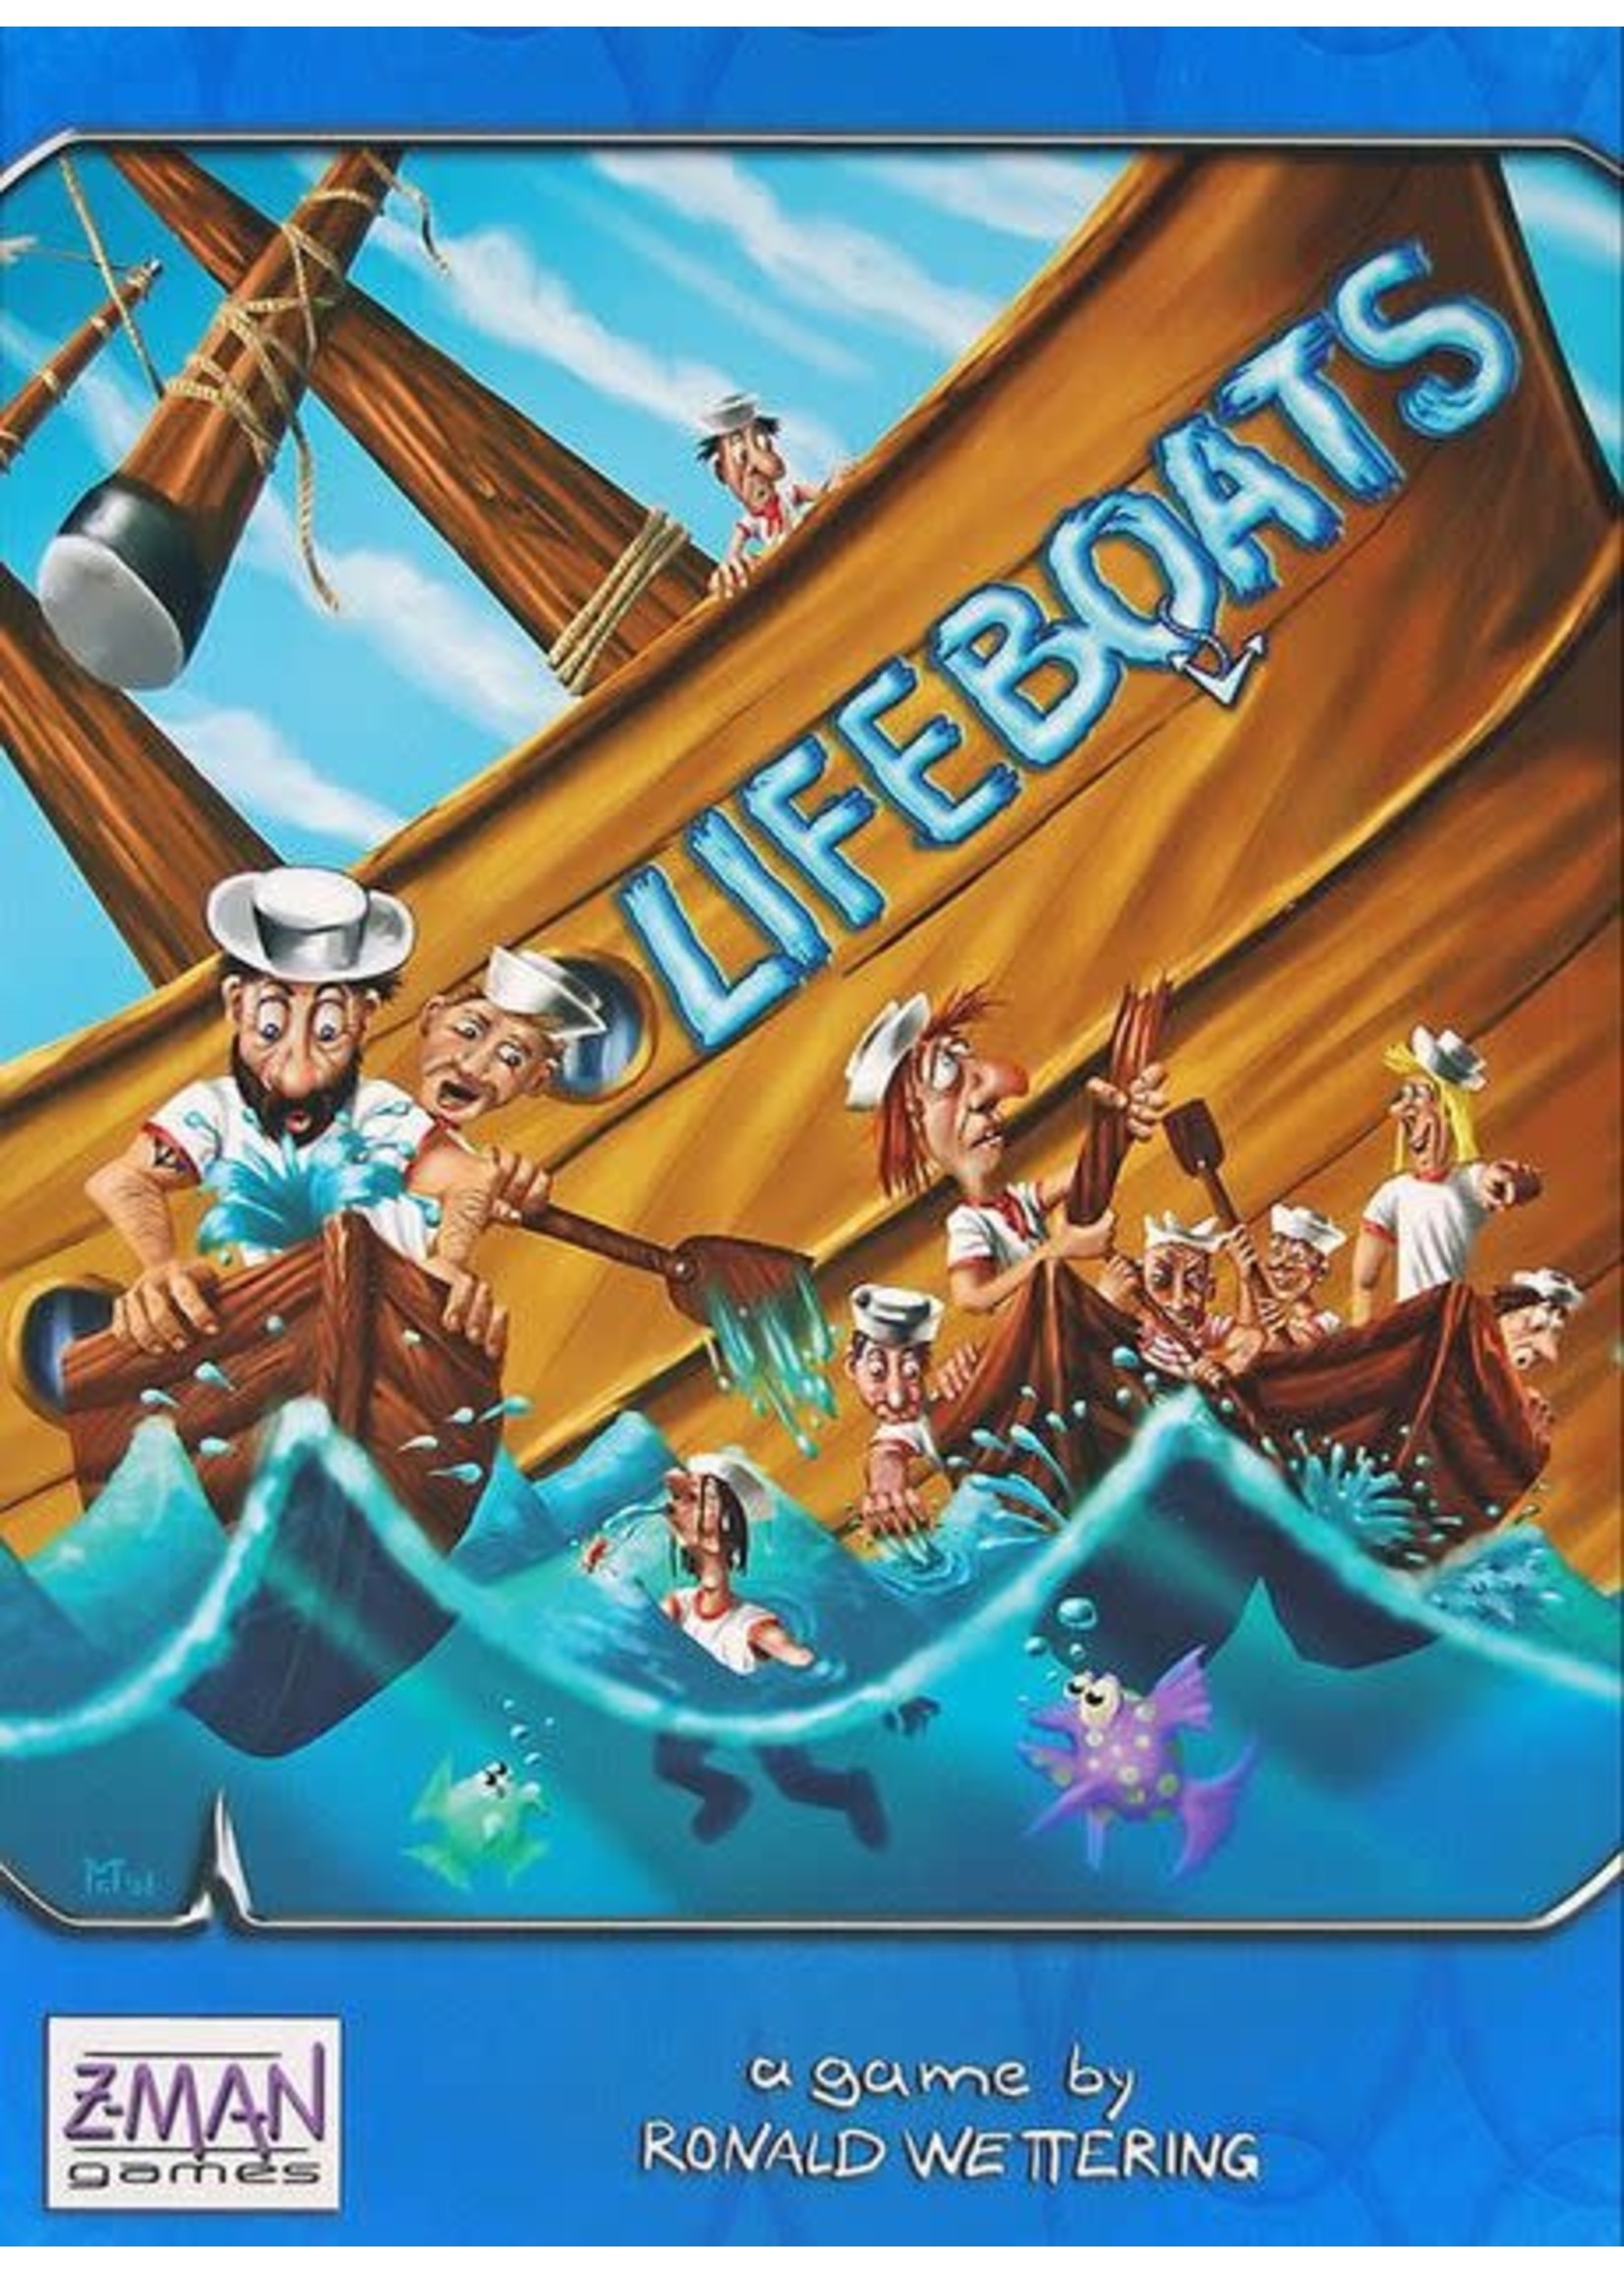 RENTAL - Lifeboats 2 Lb 4.4 oz